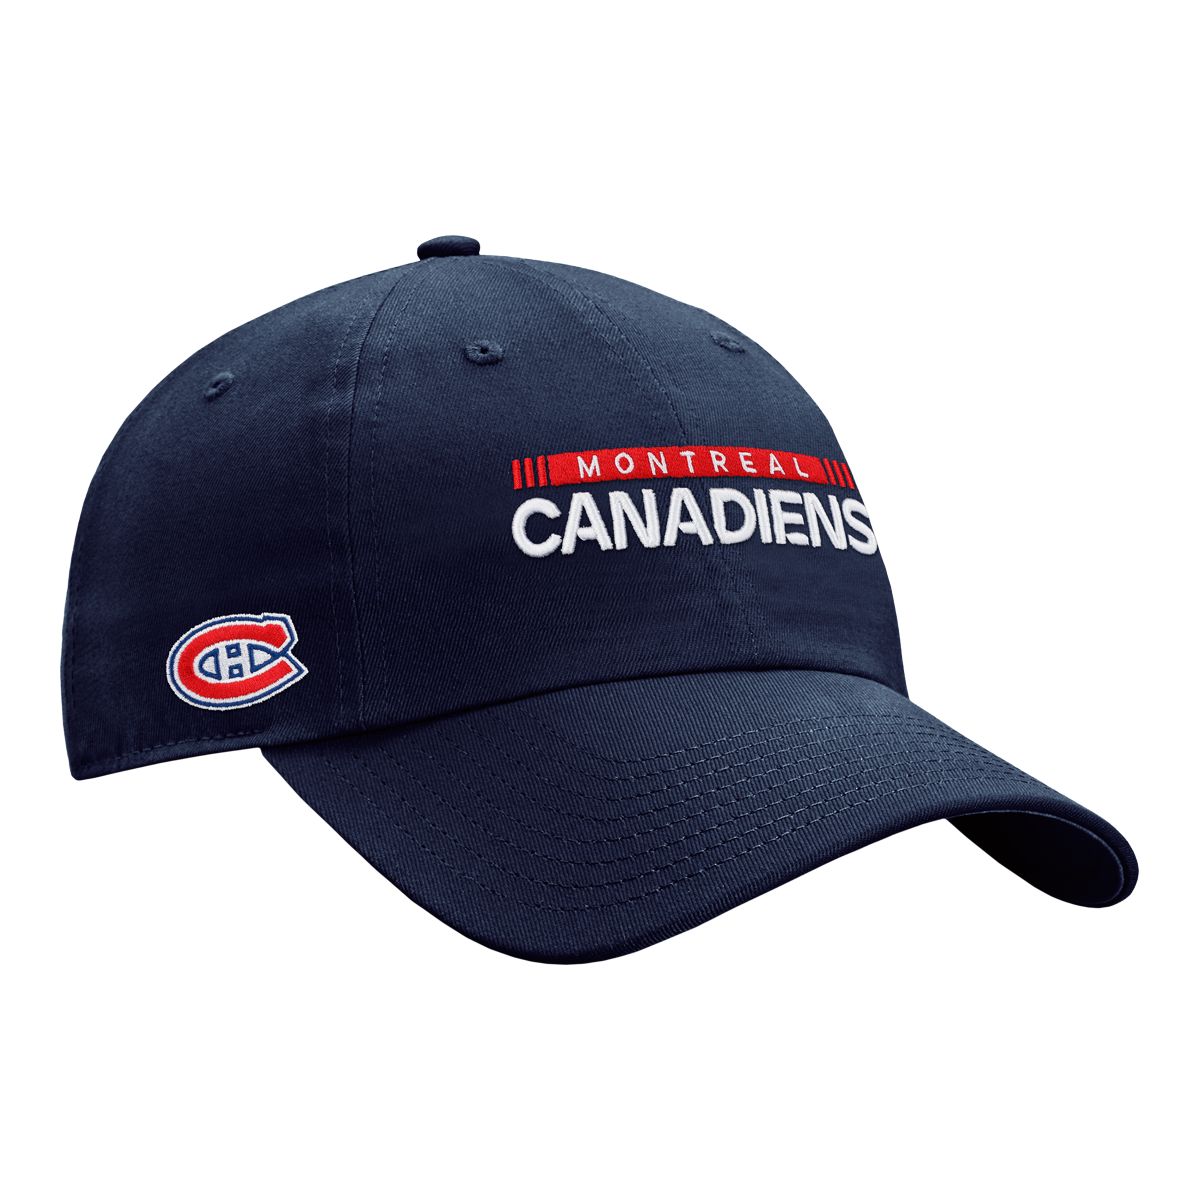 Montreal Canadiens licensed merchandise